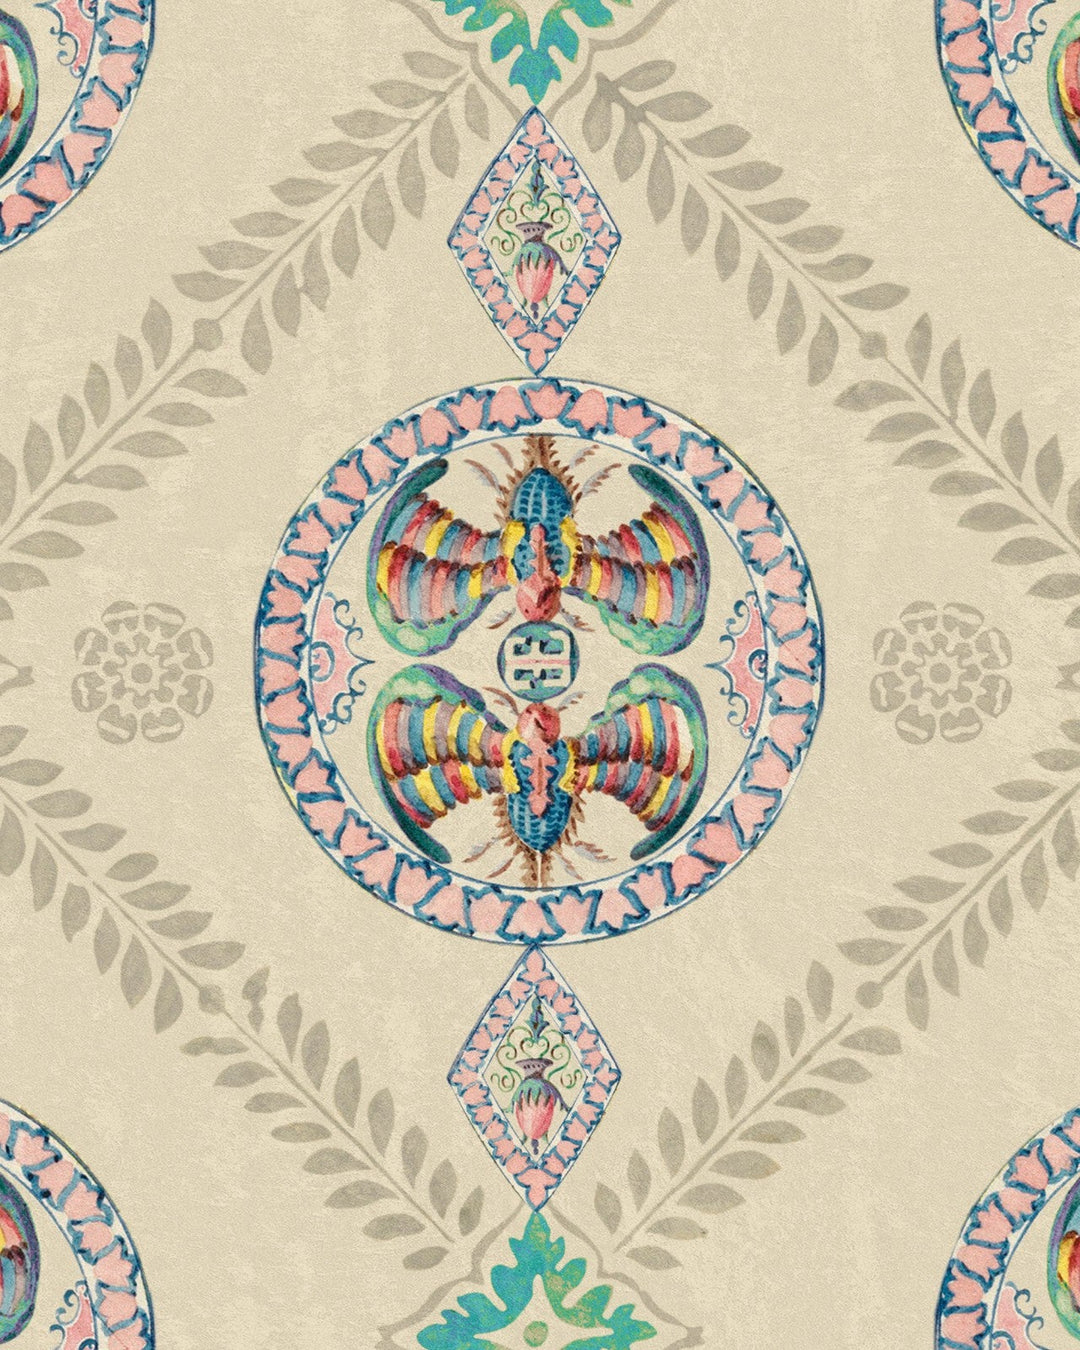 Mind-the-gap-Abeille-Decoratof-wallpaper-WP20765-cream-tole-crest-pattern-leaf-tile-repeat